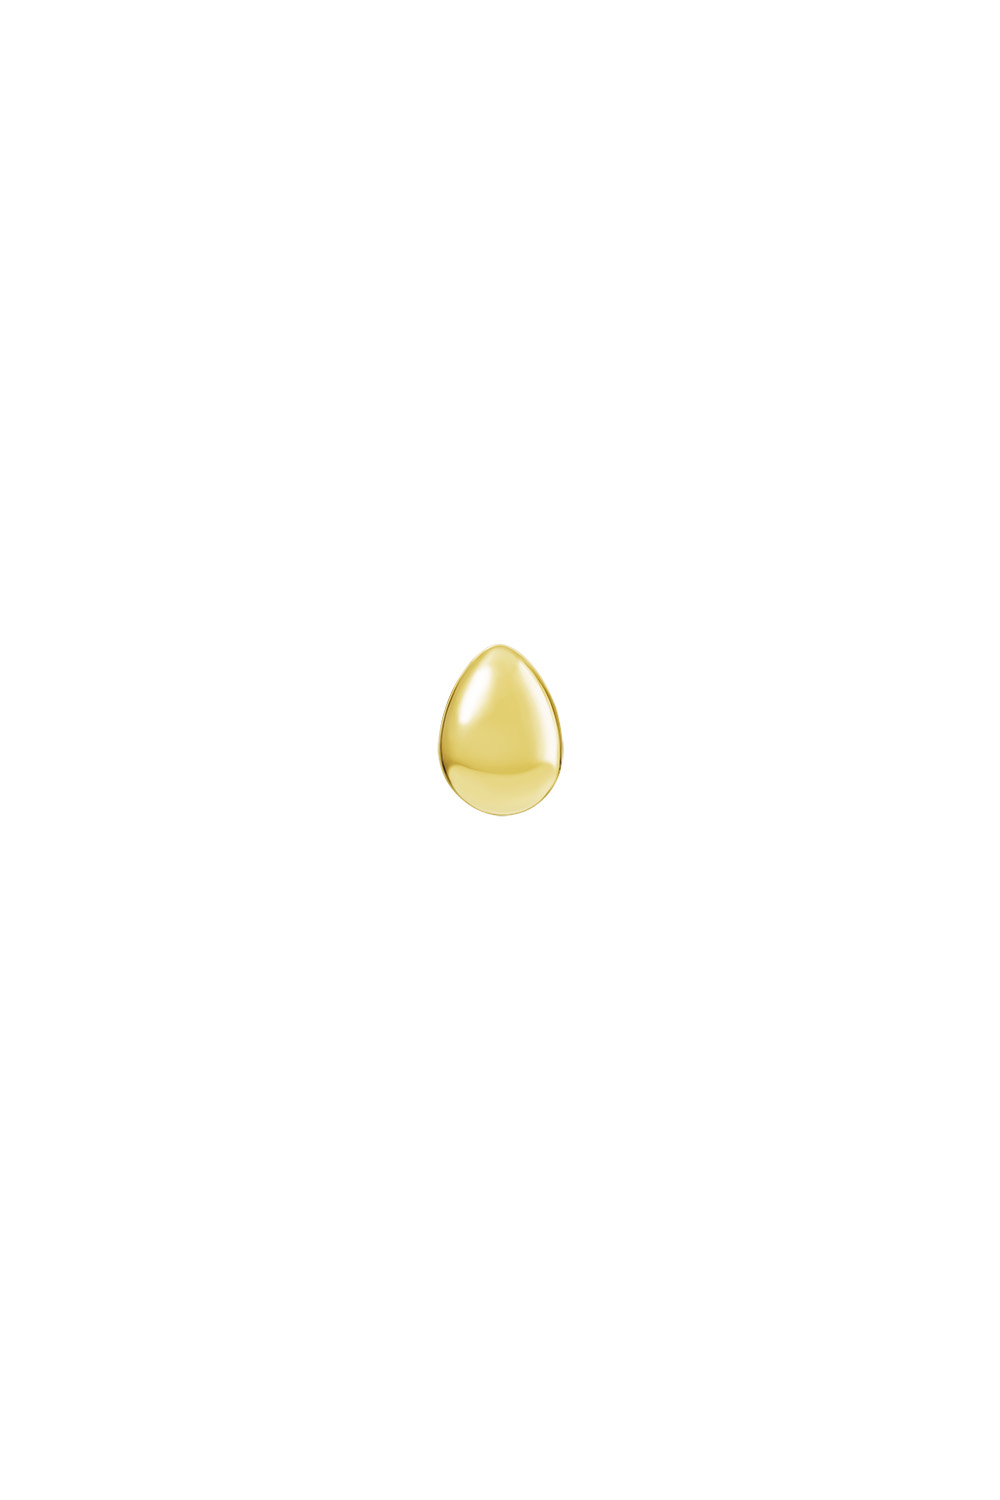 Тини-пуссета яйцо из лимонного золота 